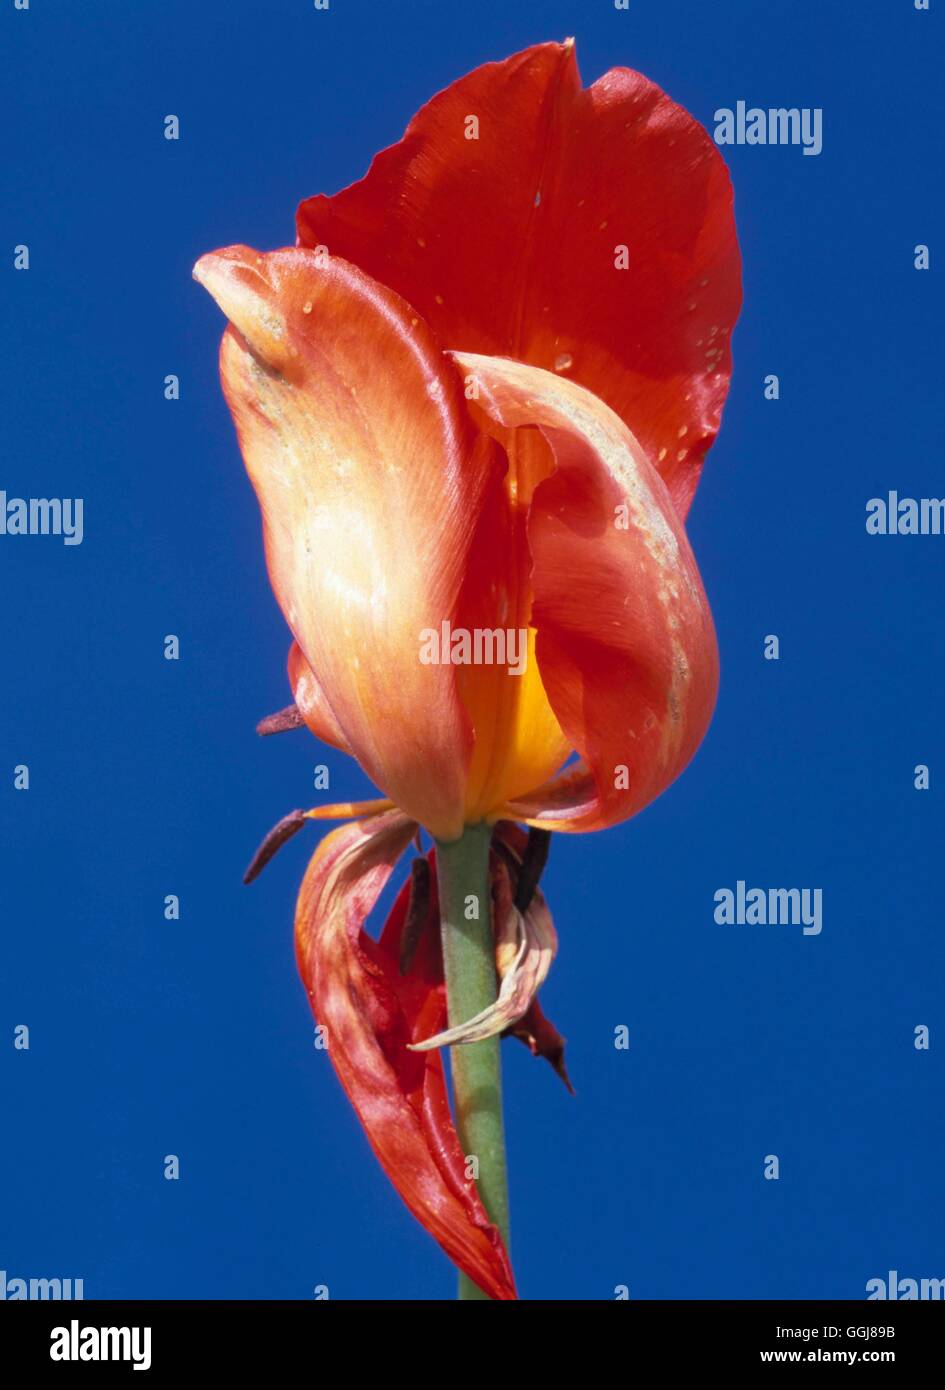 Tulip Fire - causing distortion   DIS098408 Stock Photo